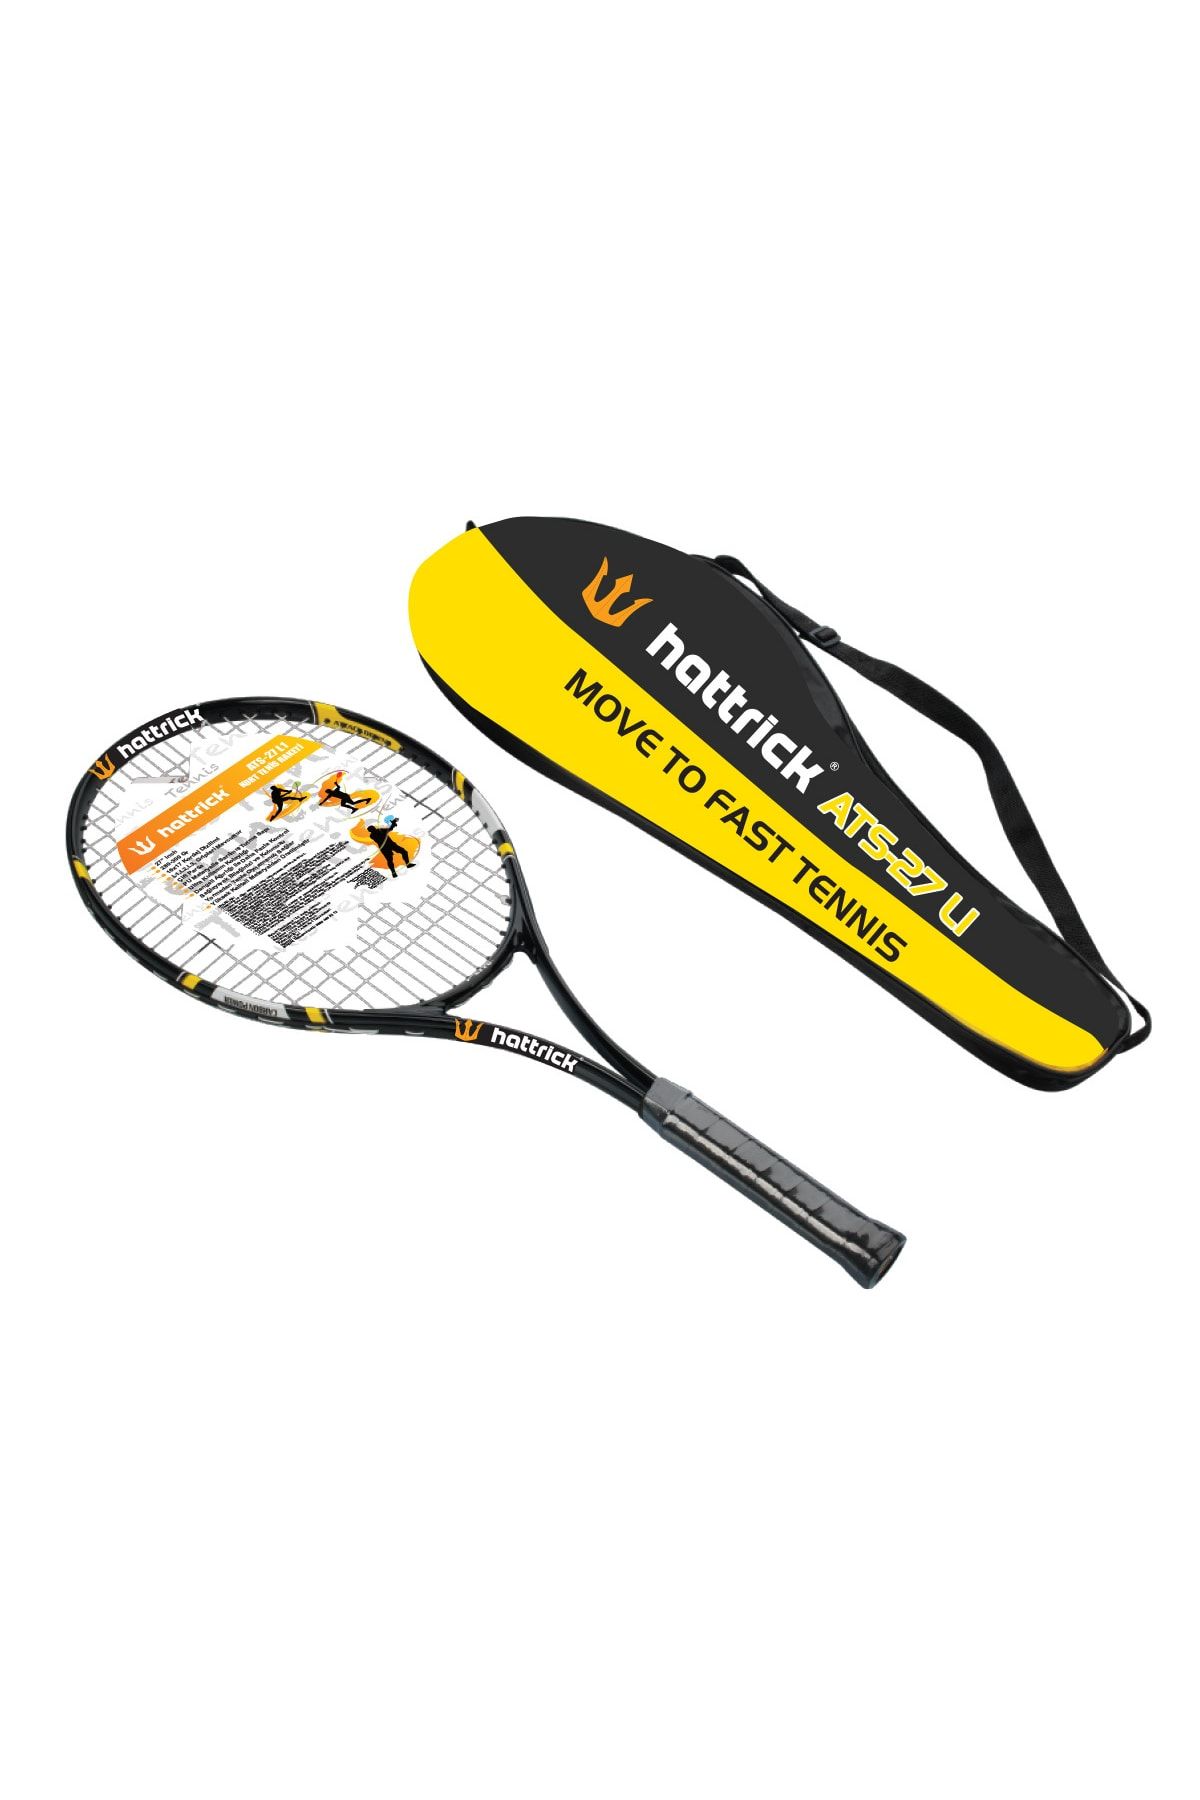 Hattrick Ats-27 Tenis Raketi Çantalı